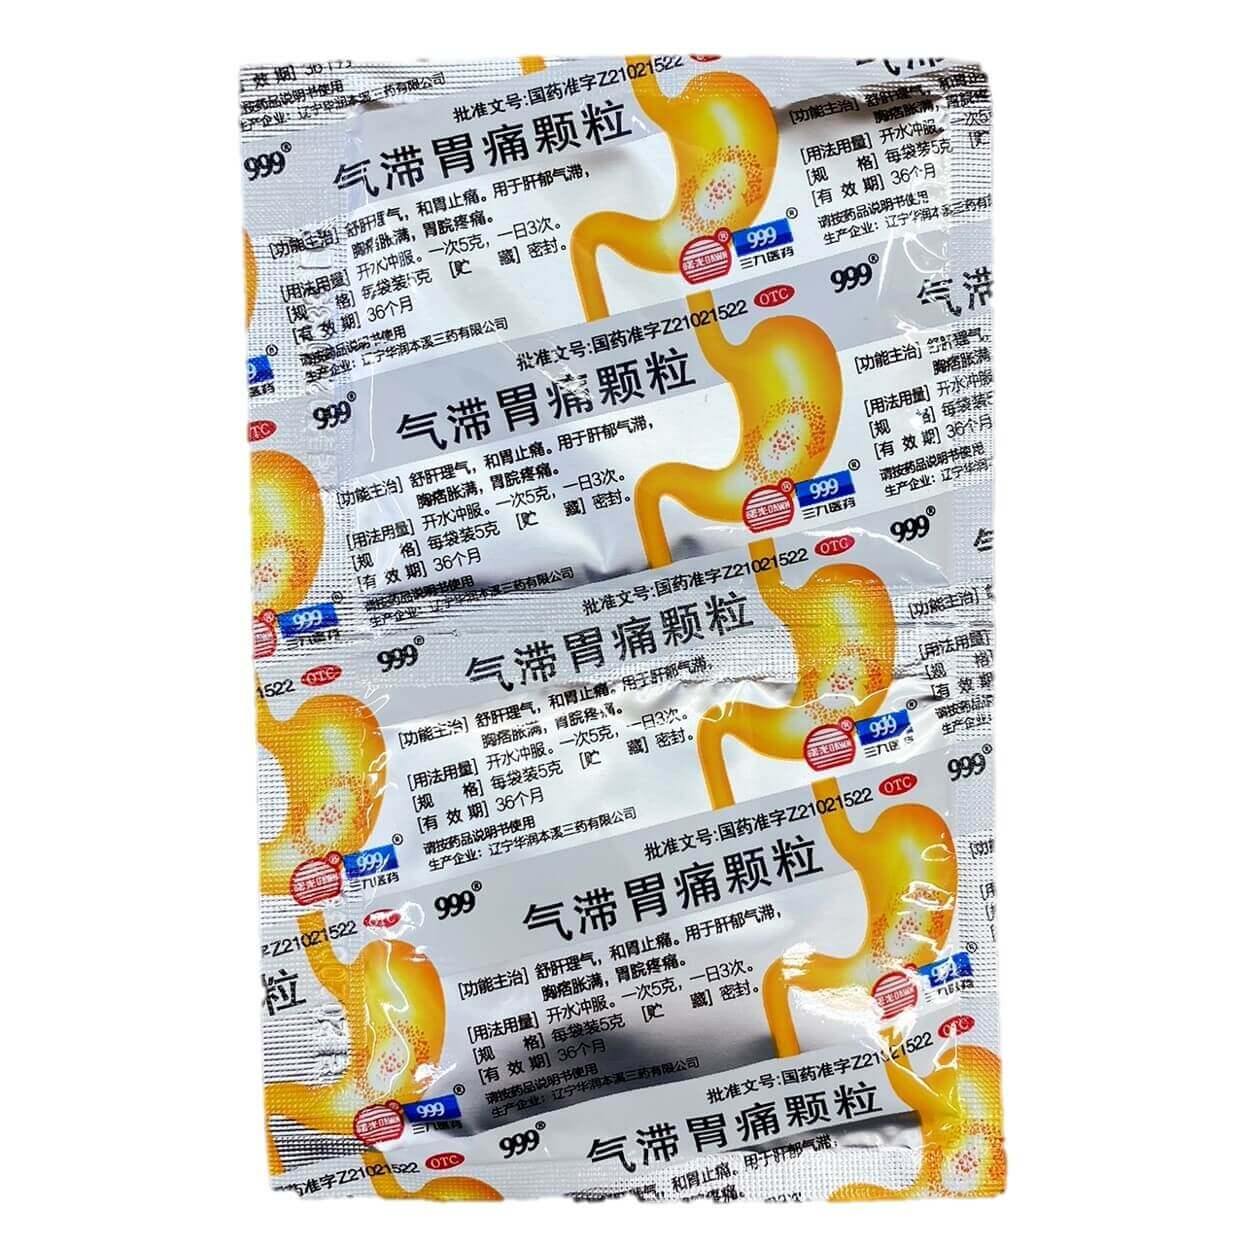 999 Qi Zhi Wei Tong Keli, Help Relief Gas & Stomachache (9 Bags) - Buy at New Green Nutrition